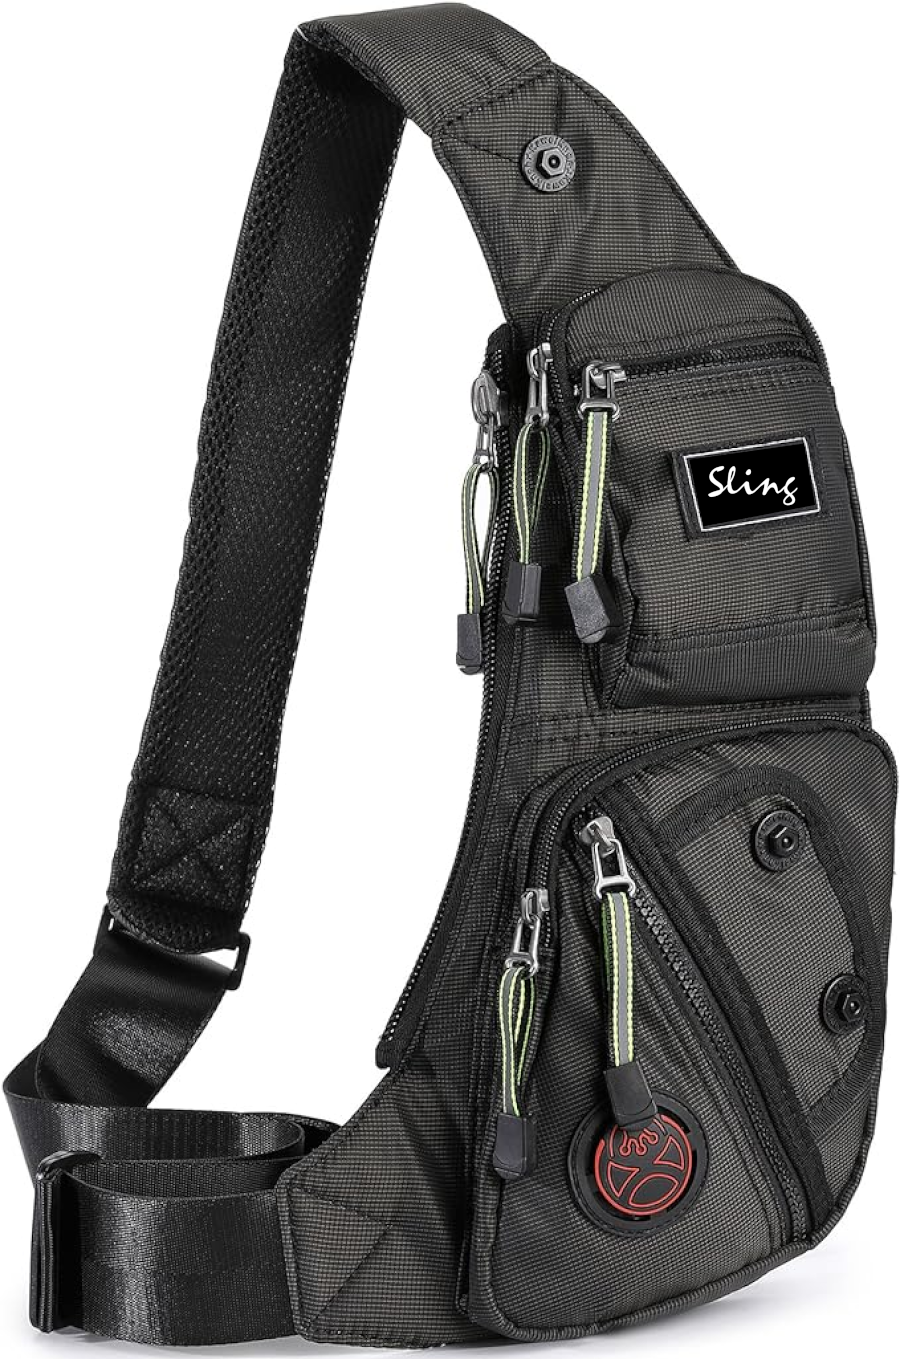 hardrider-sling-bag